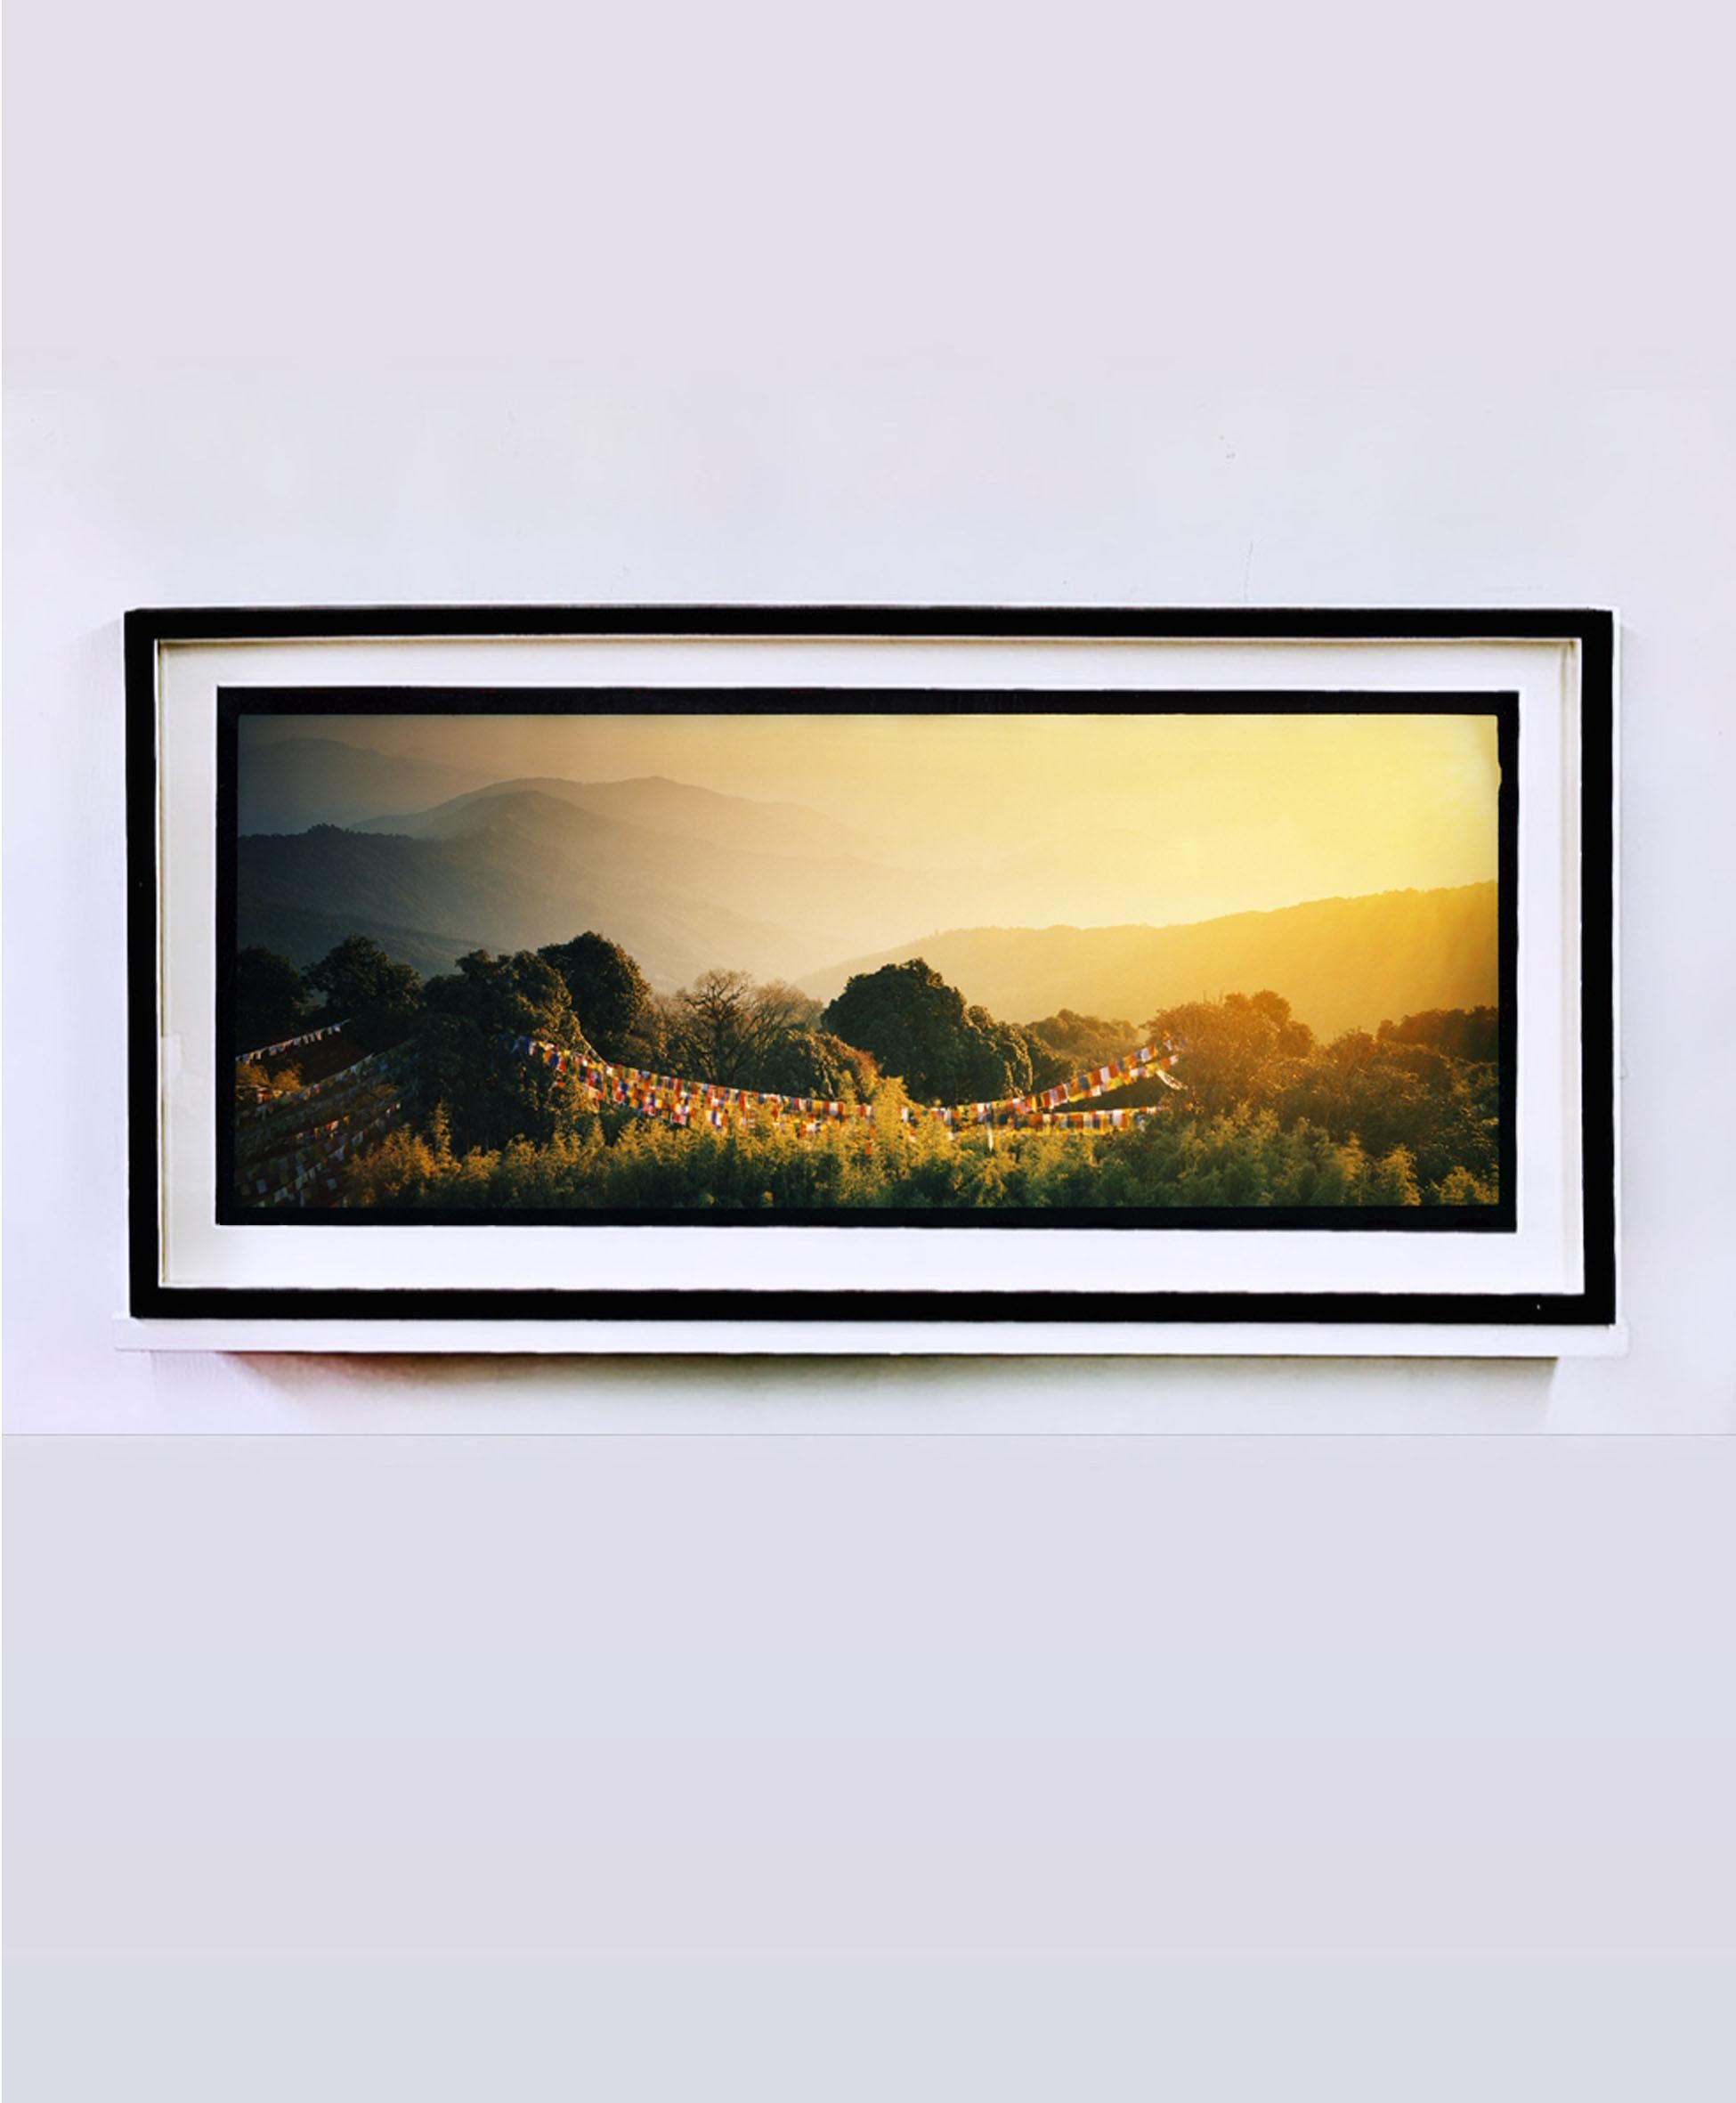 Prayer Flags, Darjeeling, - Sunrise, landscape color photography - Print by Richard Heeps